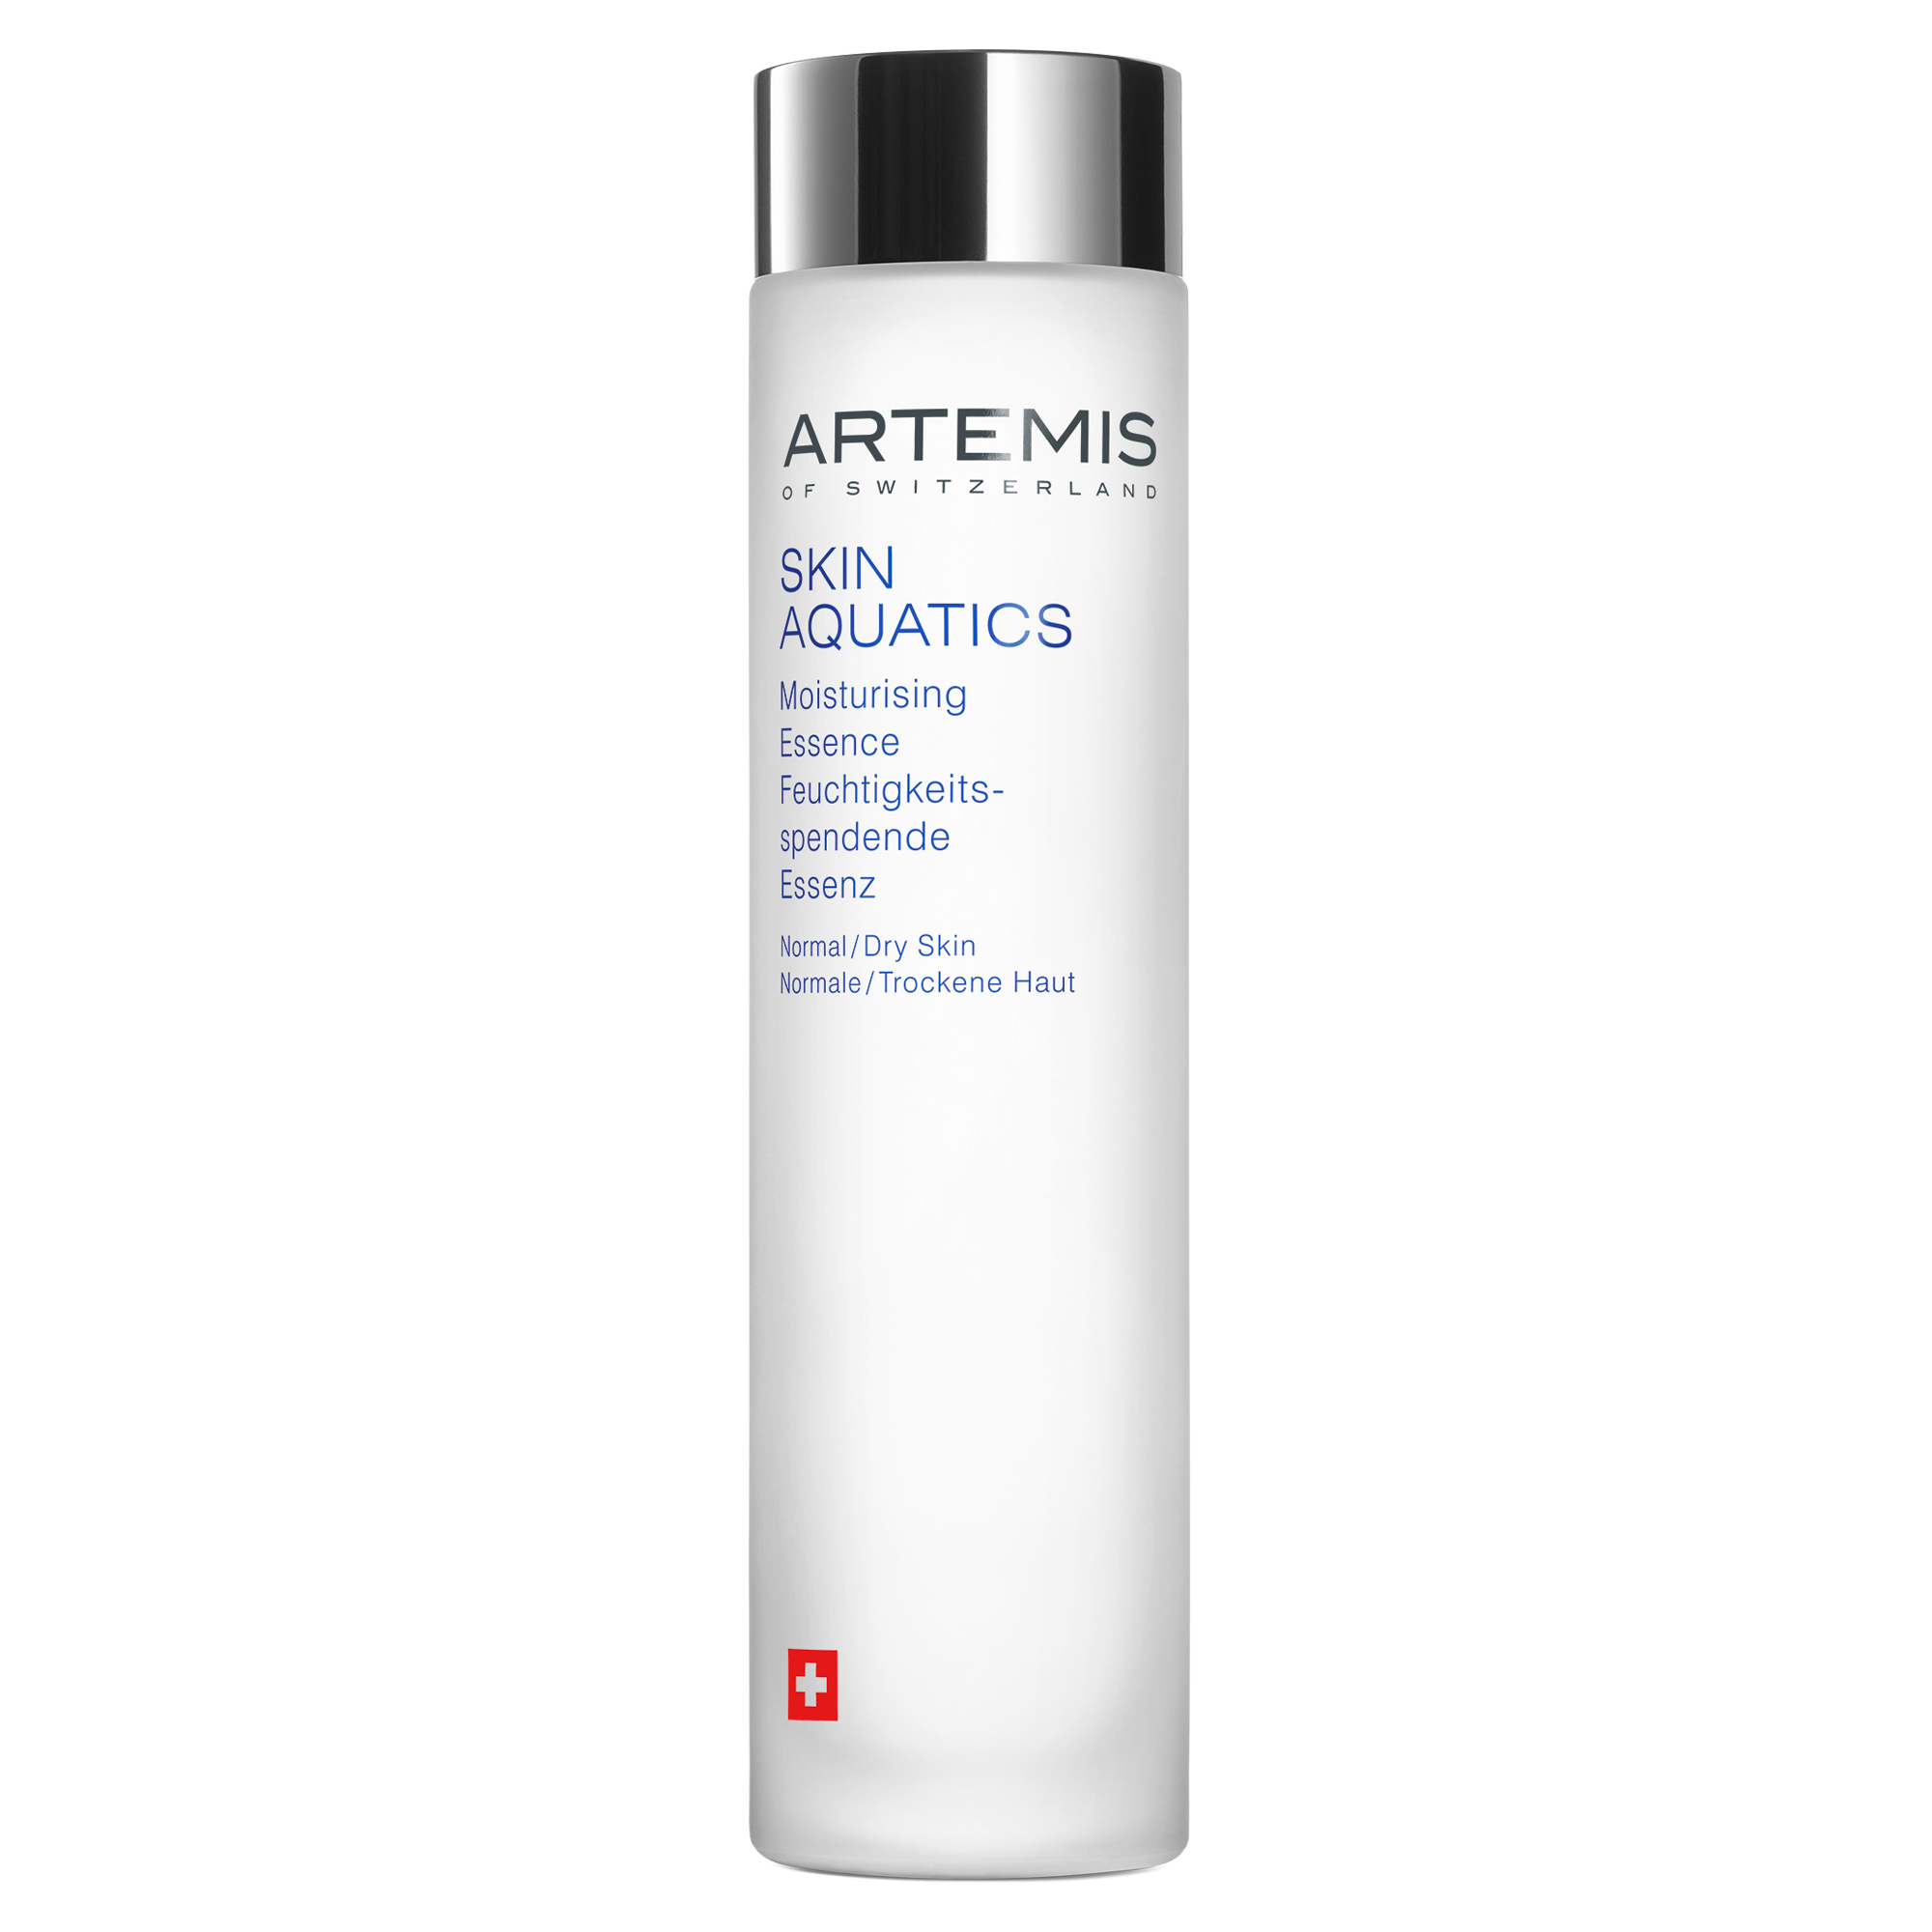 Artemis Skin Aquatics Moisturising Essence 150ml